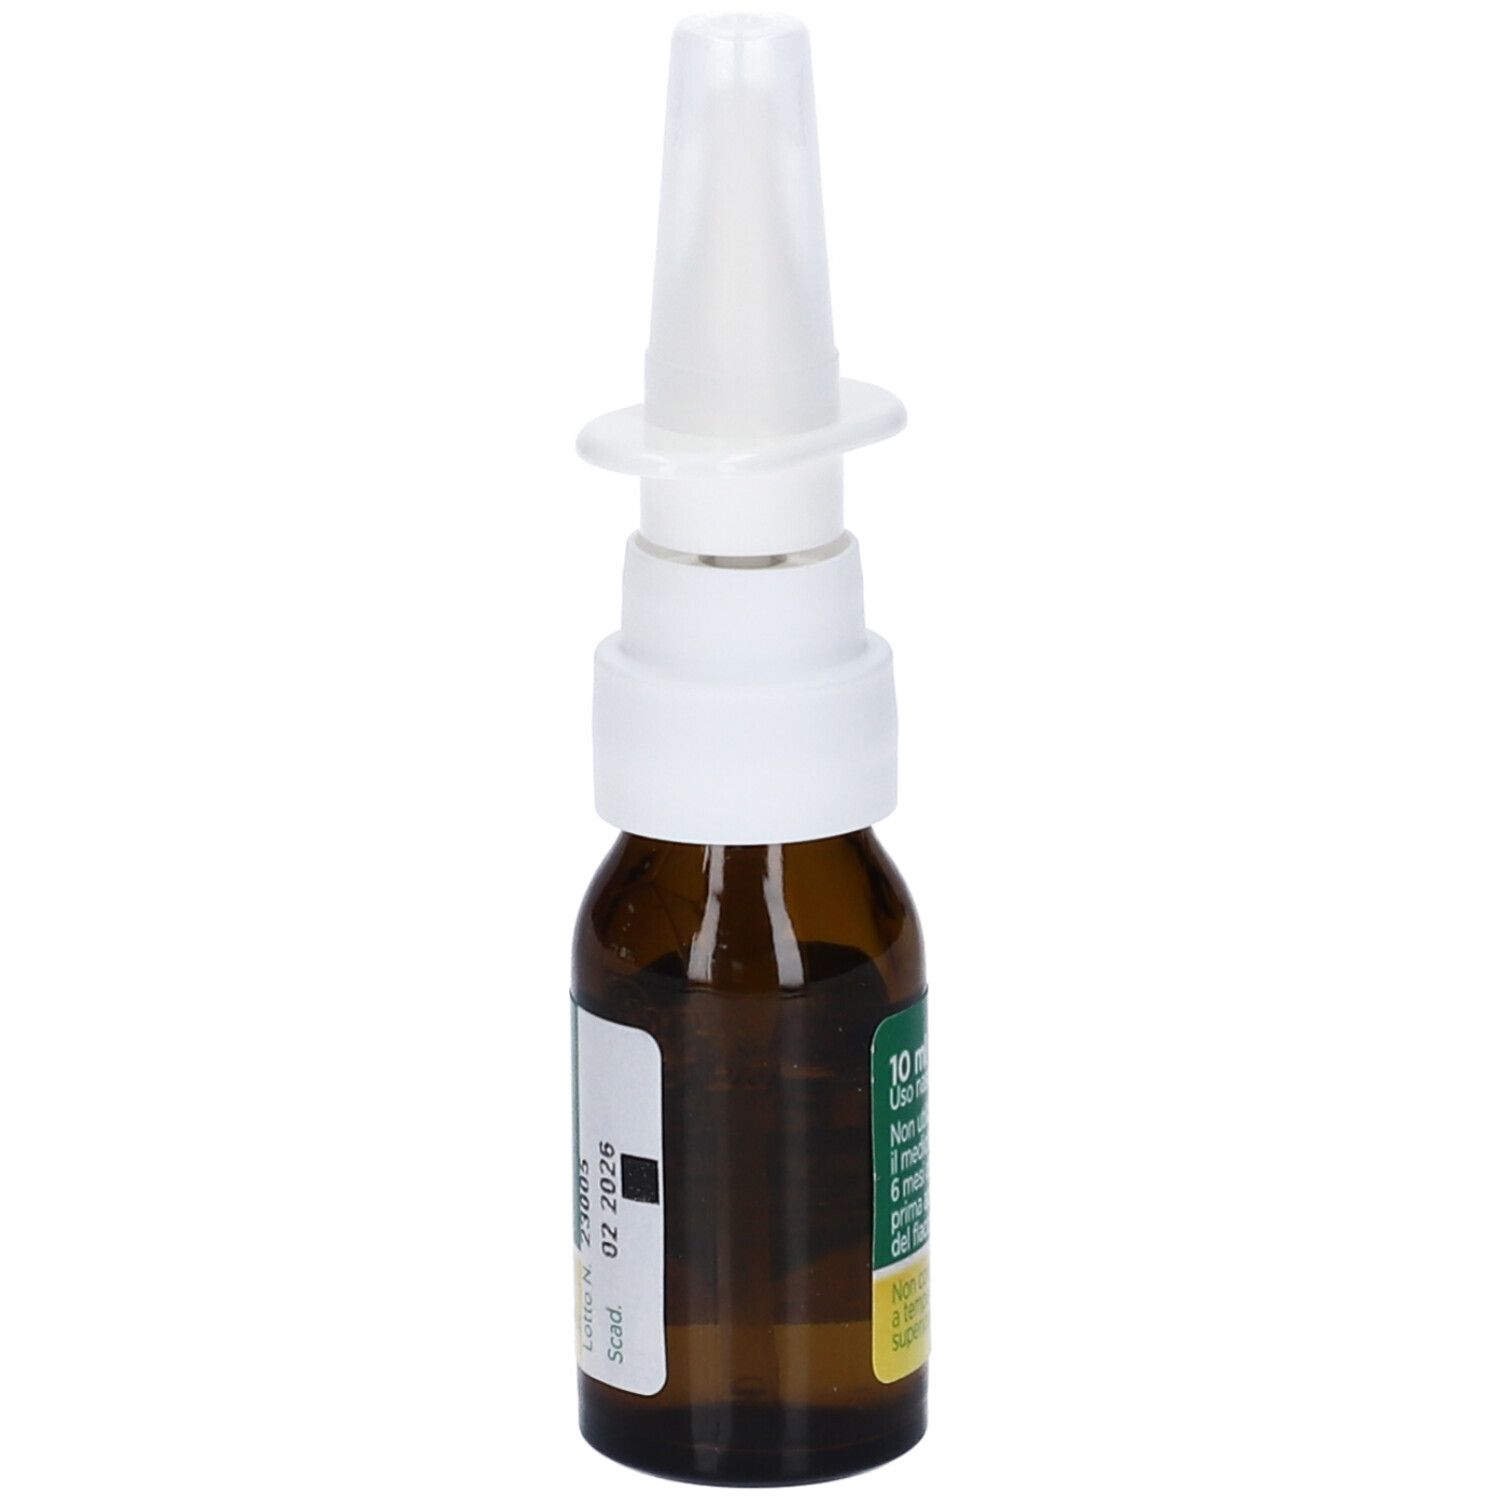 Rinazina® Antiallergica Spray Nasale